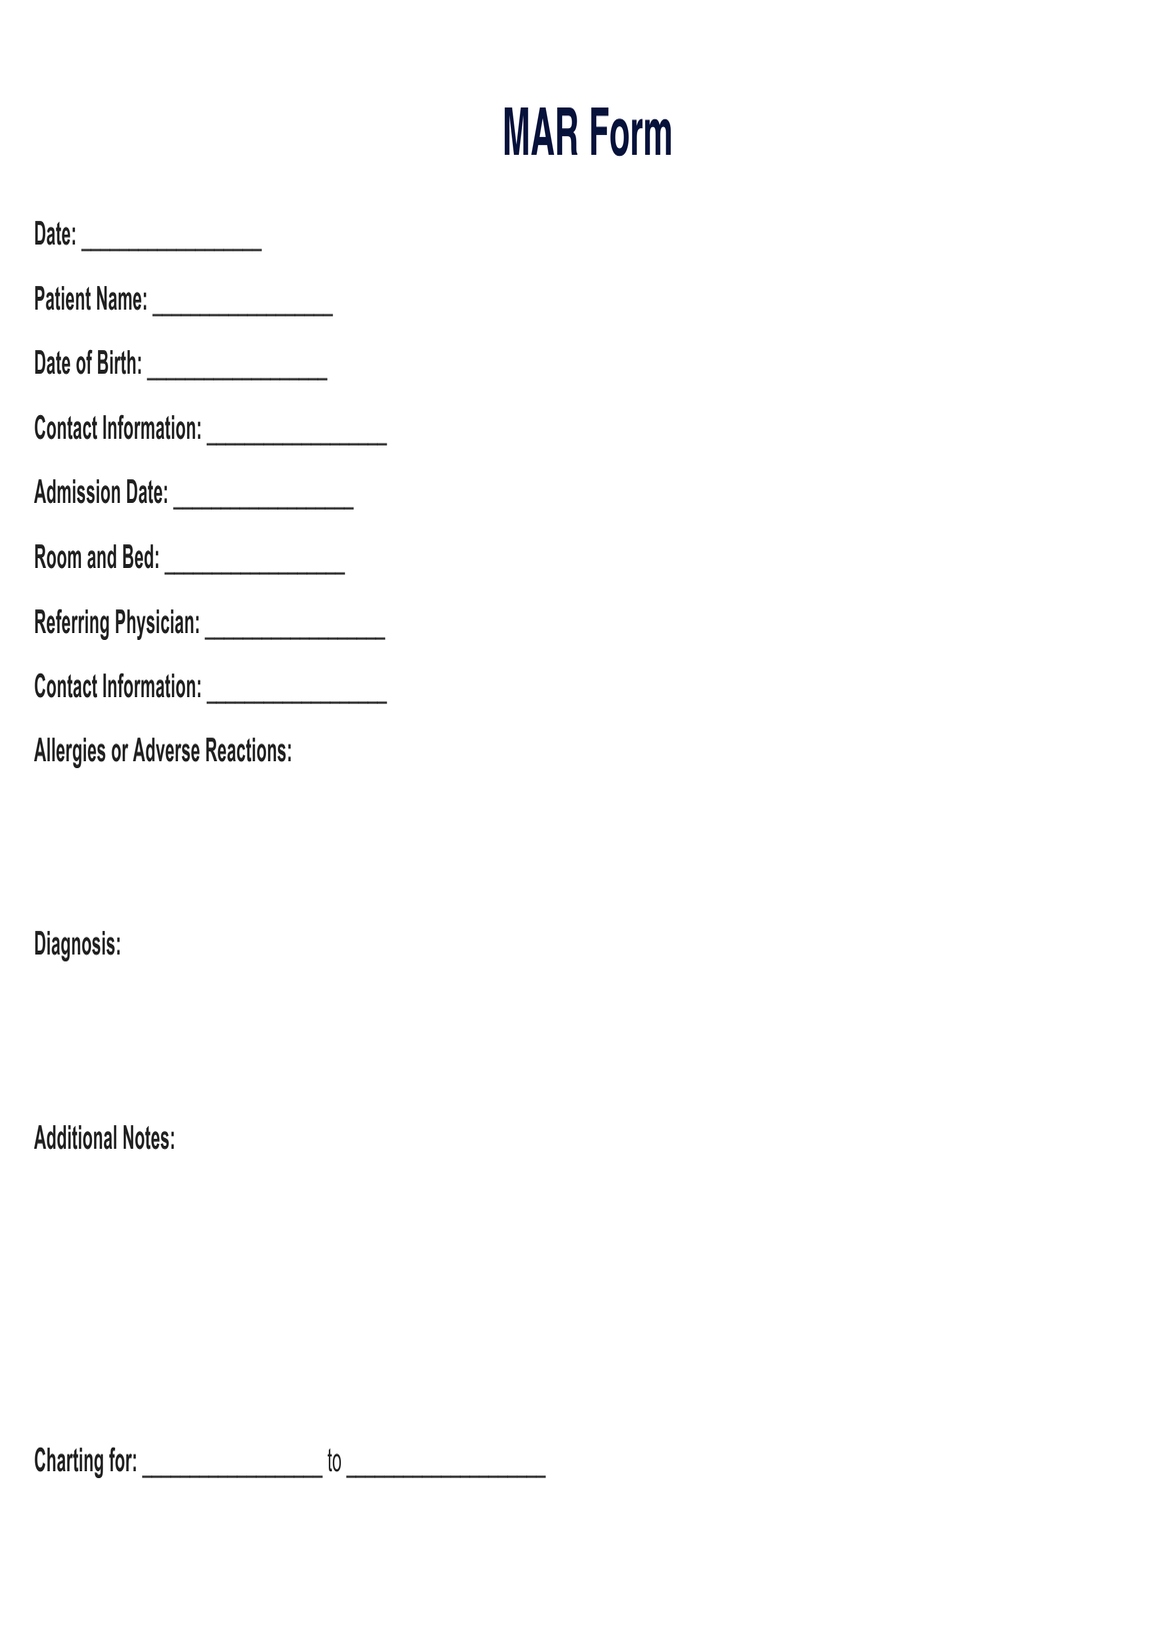 MAR Form PDF Example